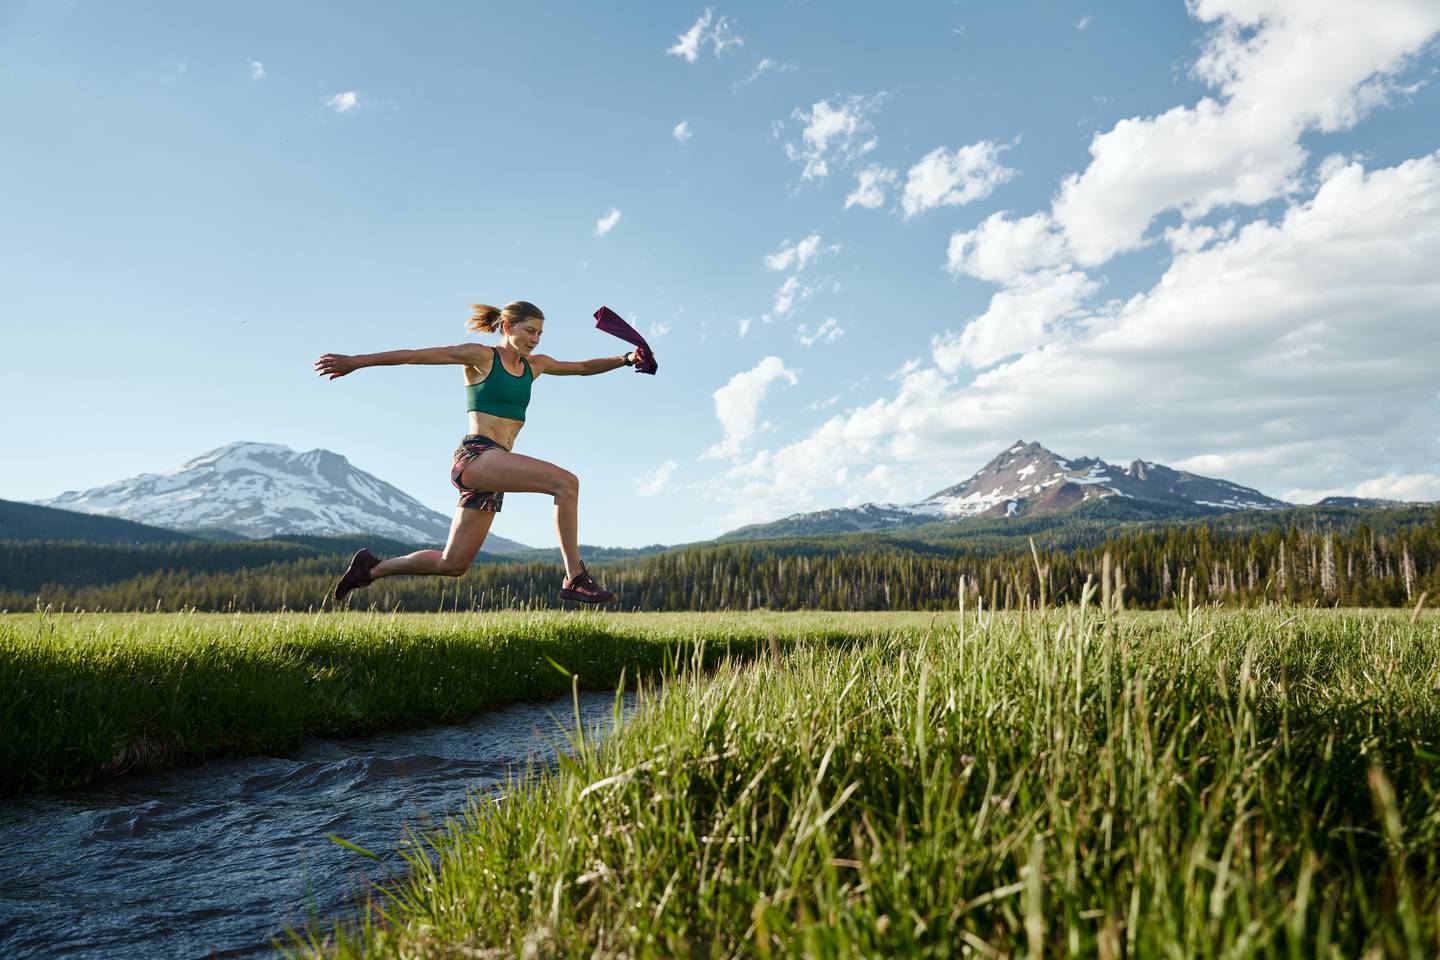 Lauren Fleshman leaps across a waterway with a mountain scene behind her